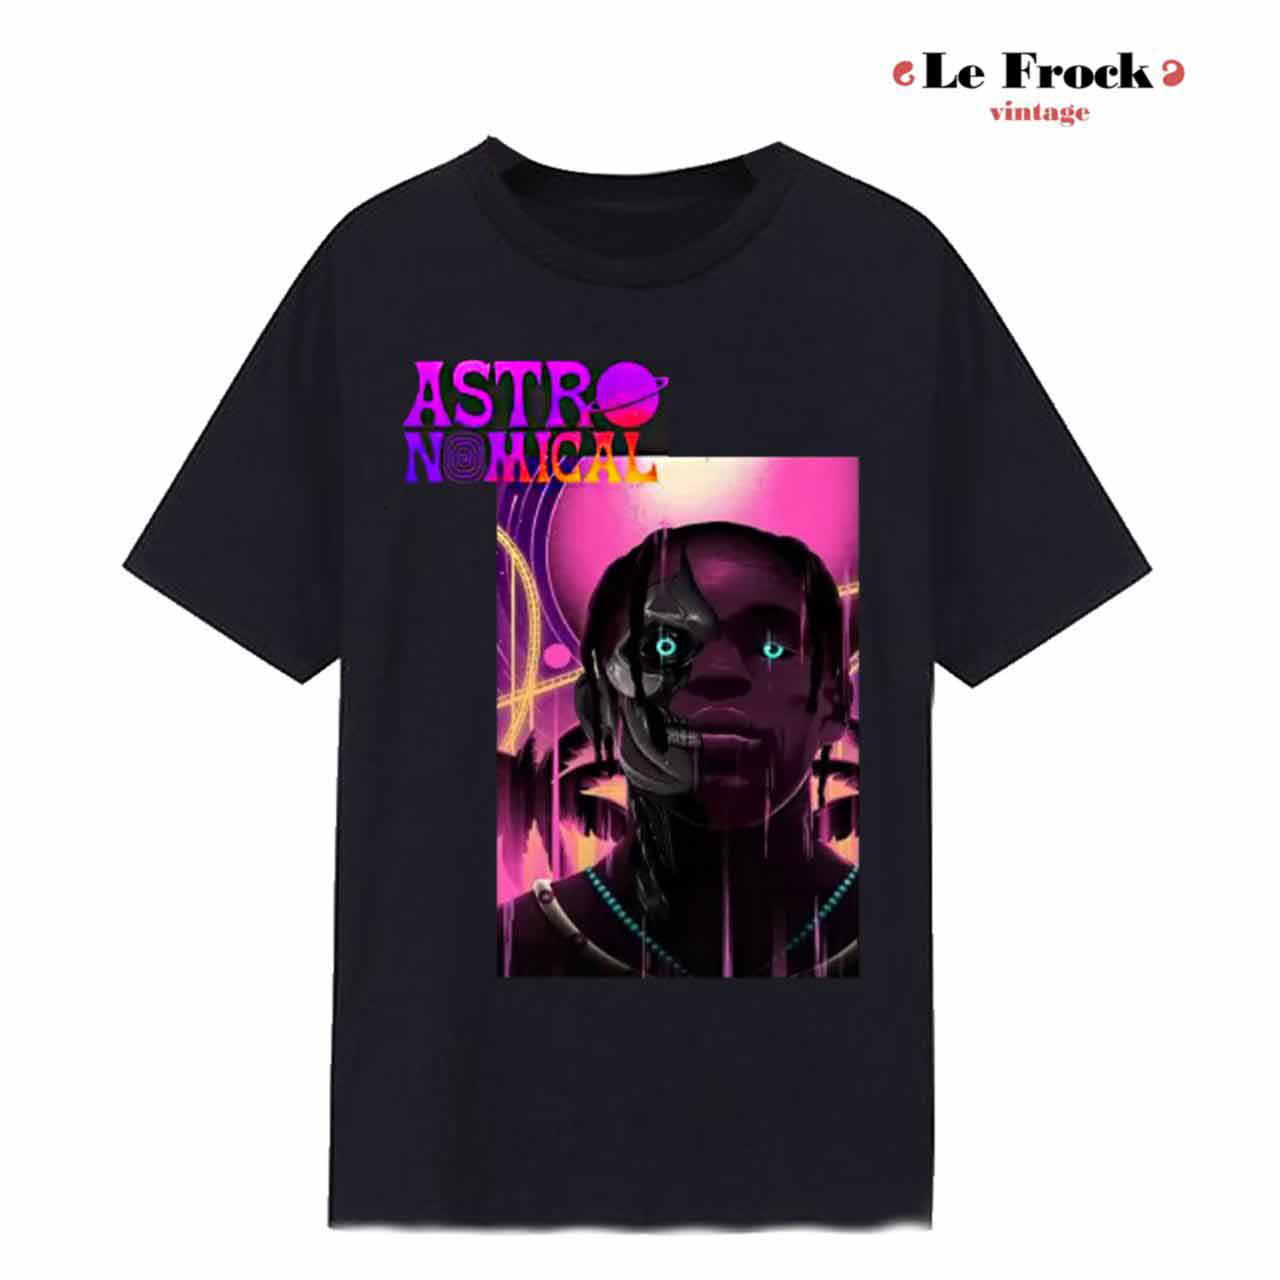 Astronomical Travis Skin Tee Shirt